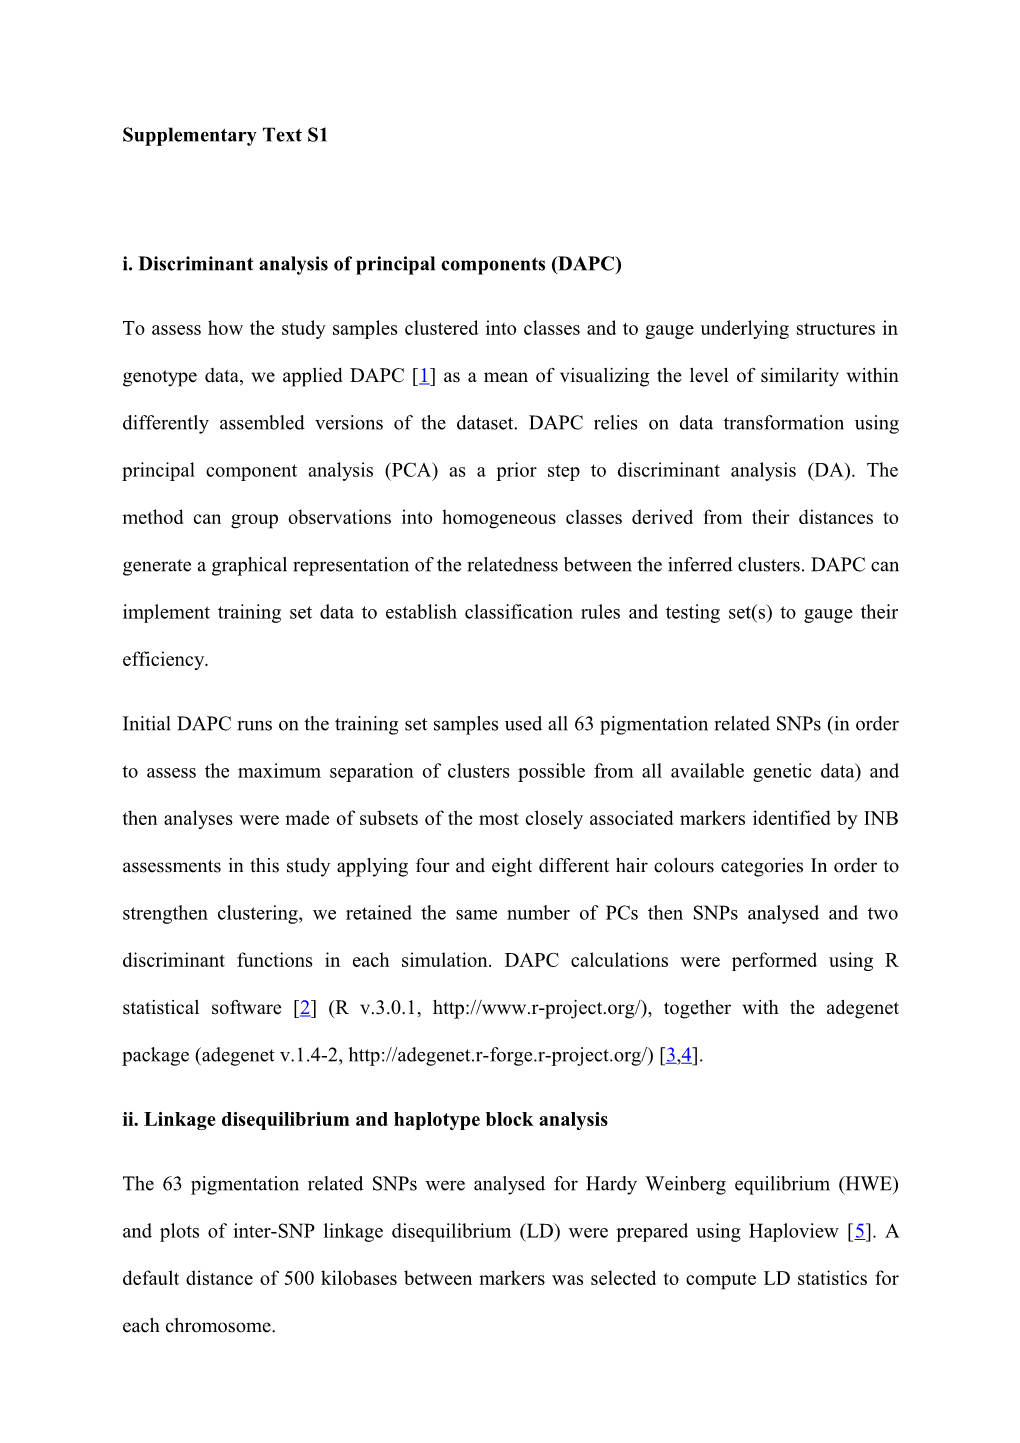 I. Discriminant Analysis of Principal Components (DAPC)